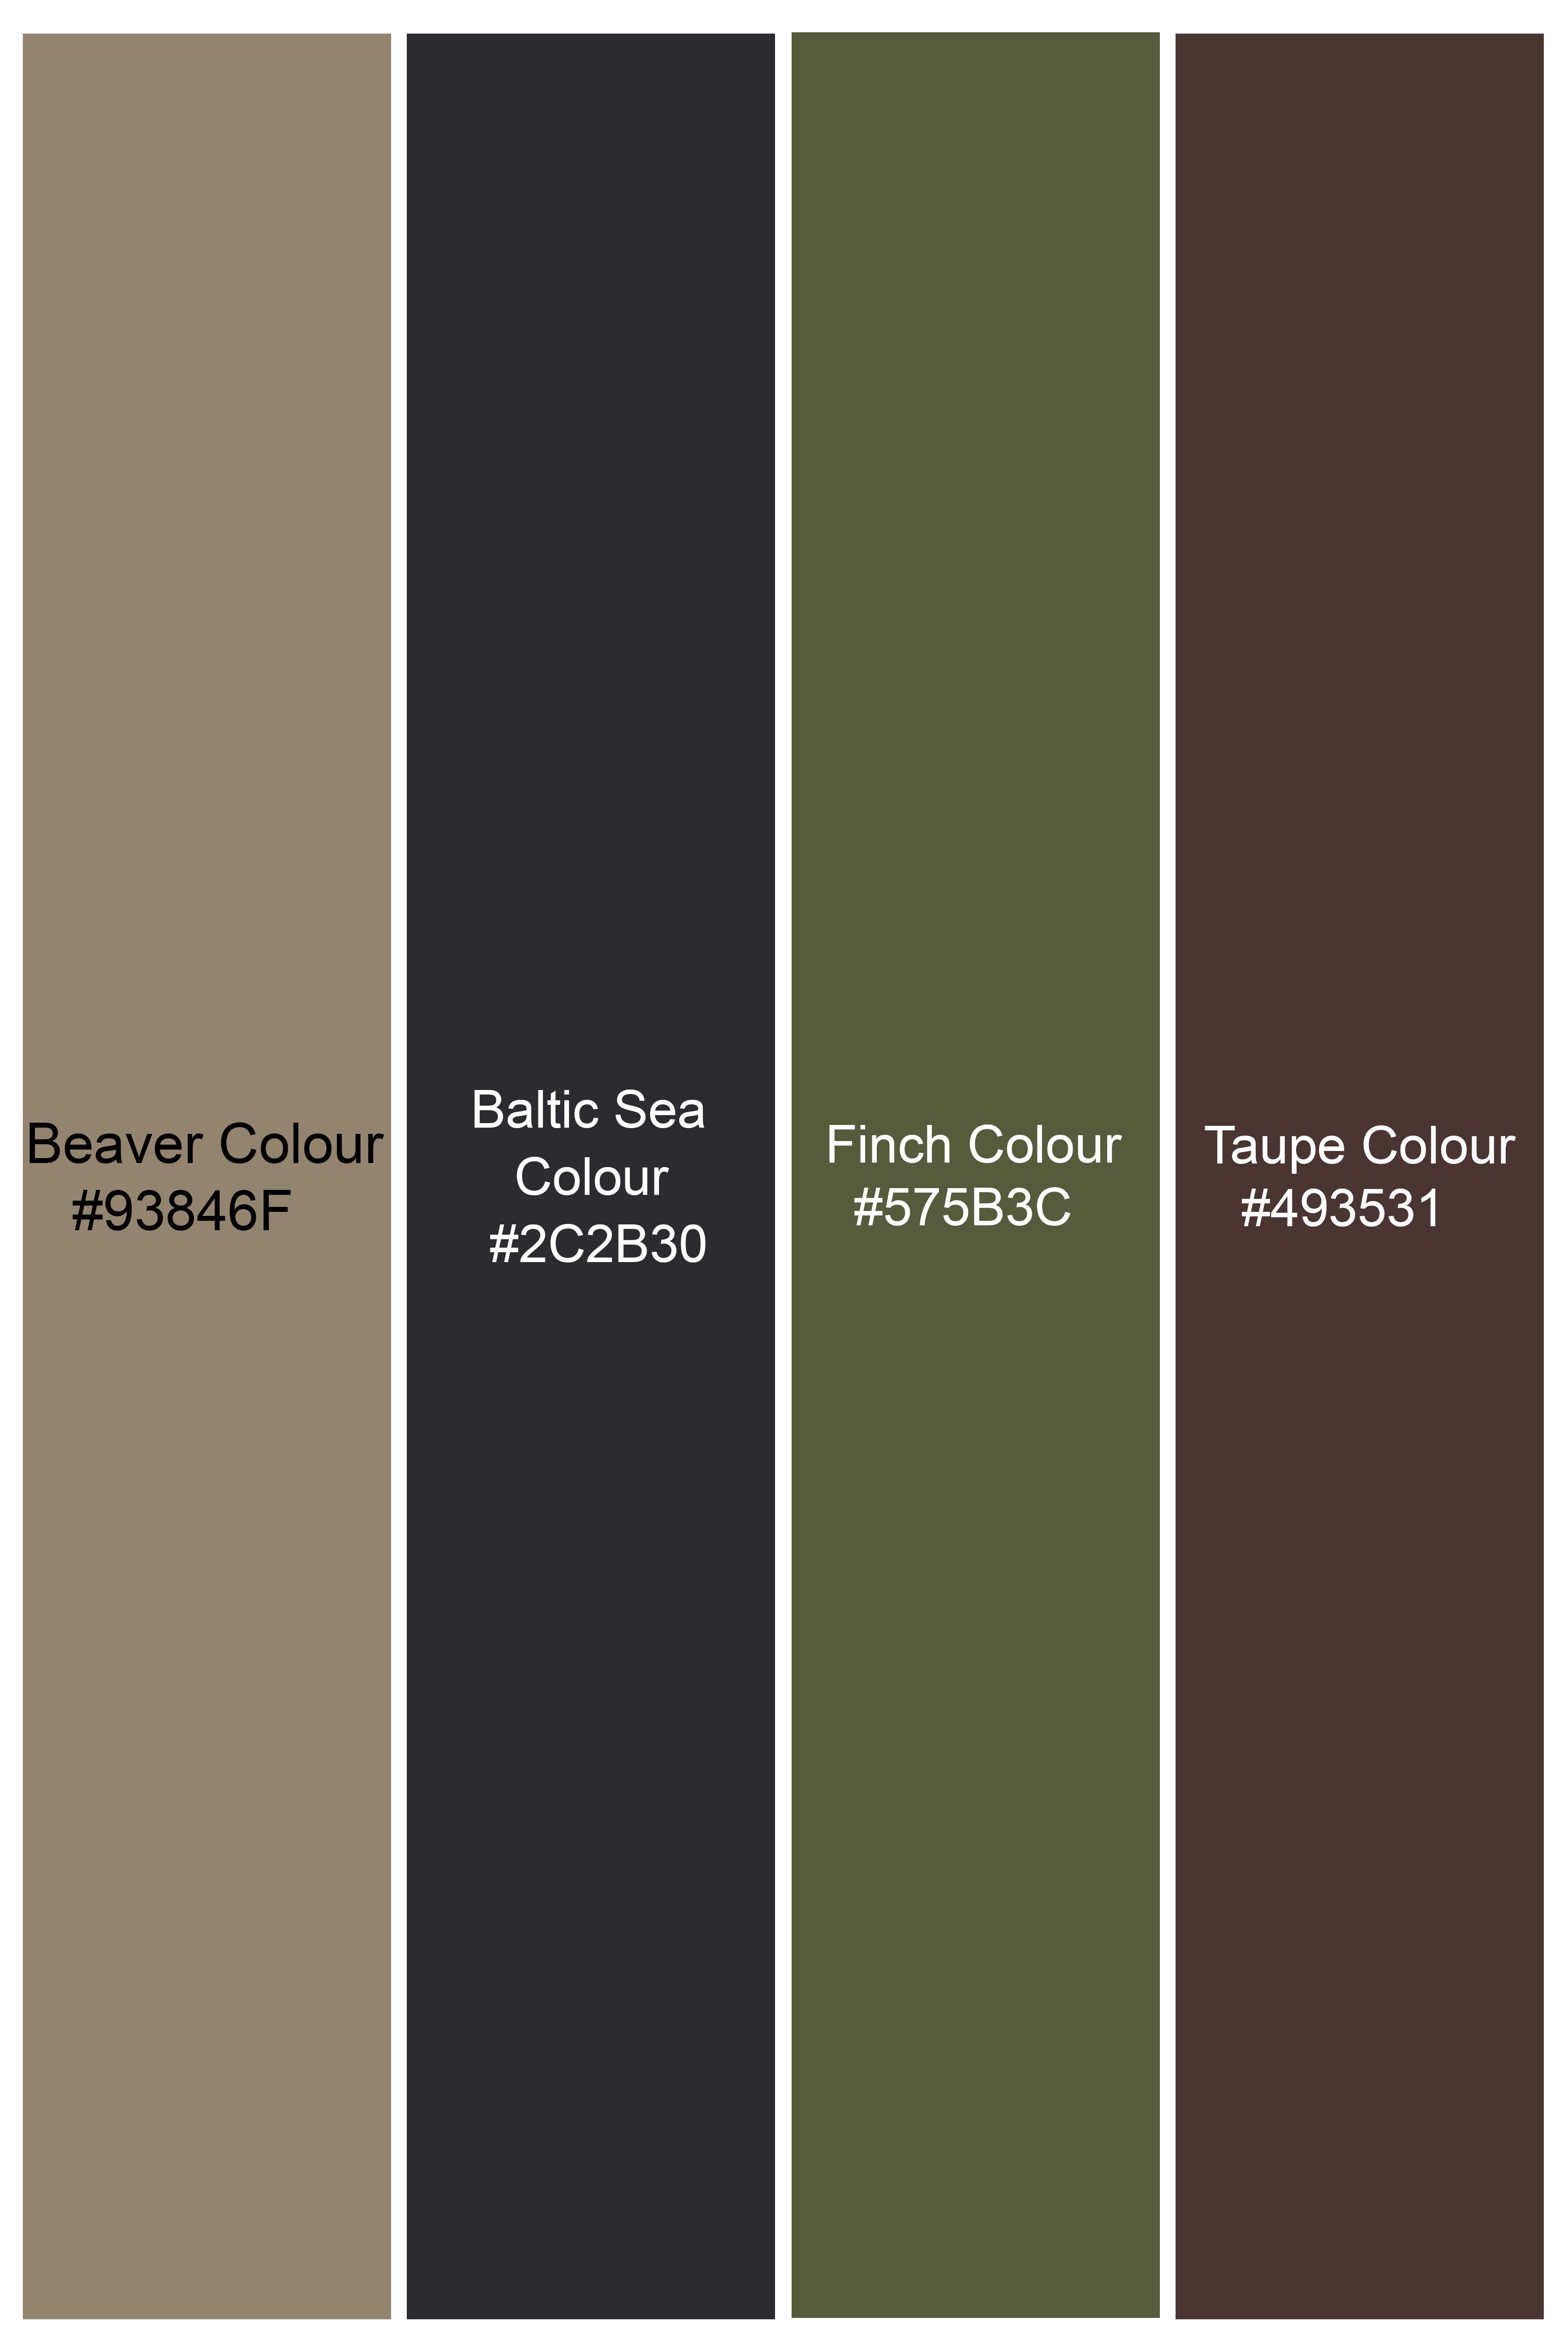 Beaver Brown and Finch Green Camouflage Premium Cotton Designer Blazer BL3026-SBP-D114-36, BL3026-SBP-D114-38, BL3026-SBP-D114-40, BL3026-SBP-D114-42, BL3026-SBP-D114-44, BL3026-SBP-D114-46, BL3026-SBP-D114-48, BL3026-SBP-D114-50, BL3026-SBP-D114-52, BL3026-SBP-D114-54, BL3026-SBP-D114-56, BL3026-SBP-D114-58, BL3026-SBP-D114-60